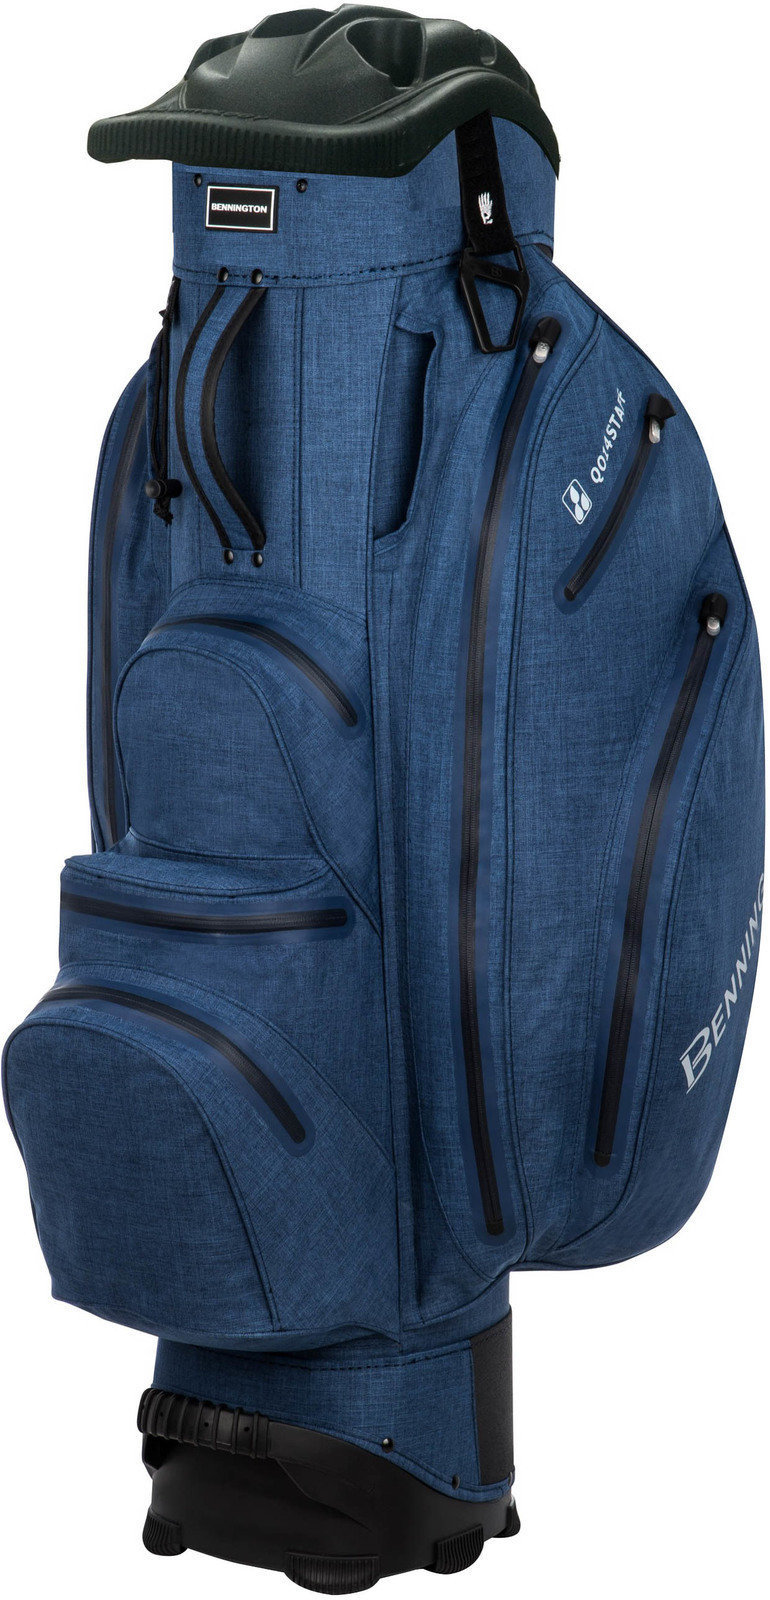 Saco de golfe Bennington QO 14 Premium Waterproof Cart Bag Denim Blue